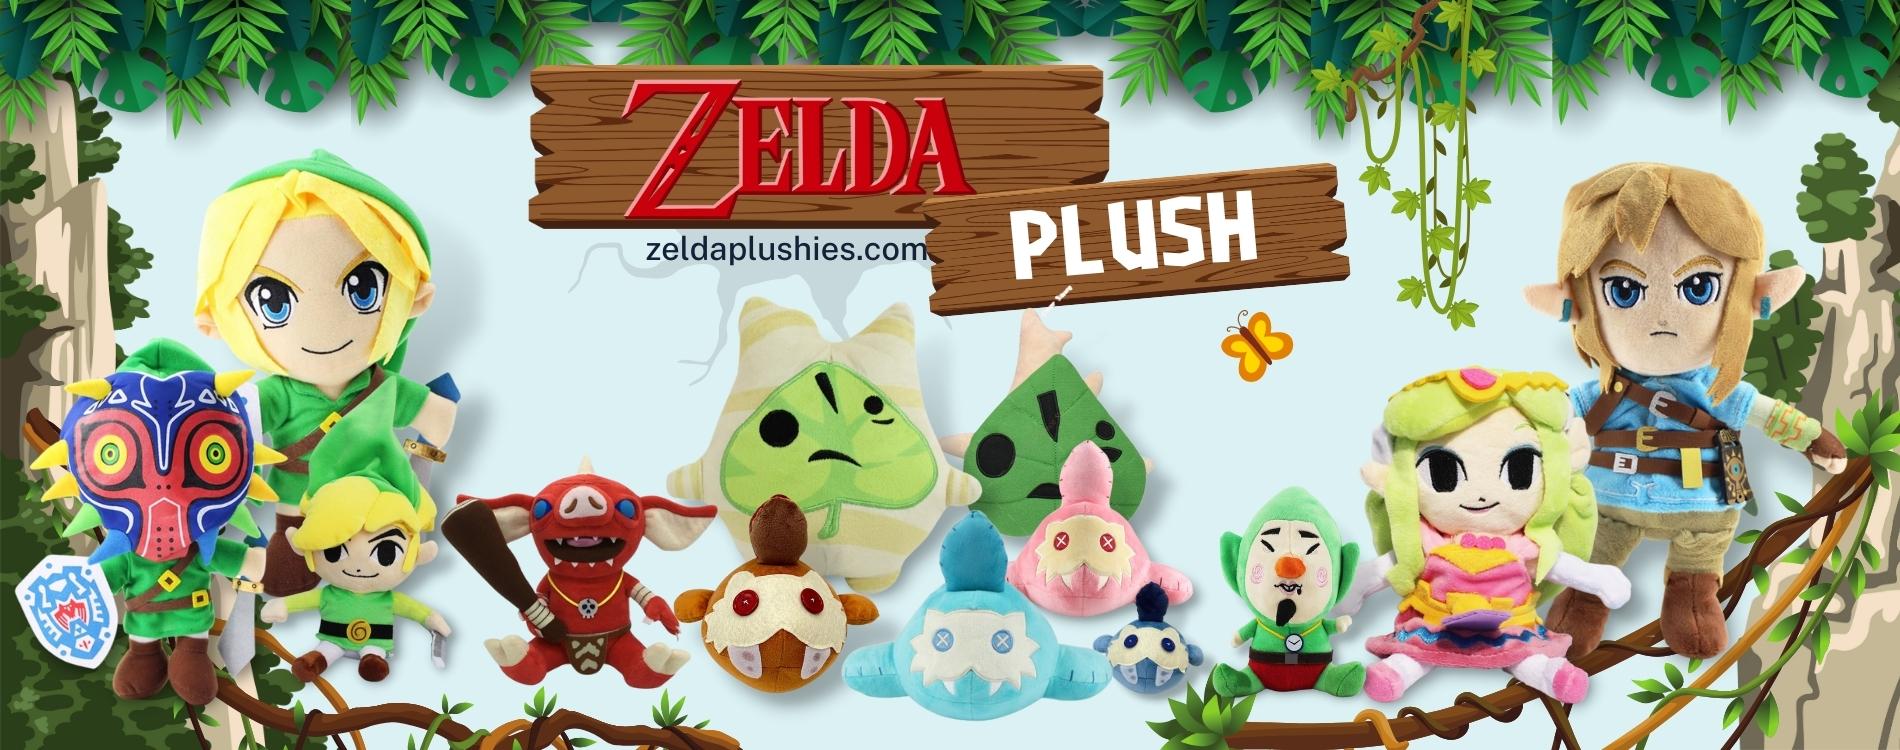 zelda plush banner - Zelda Plush